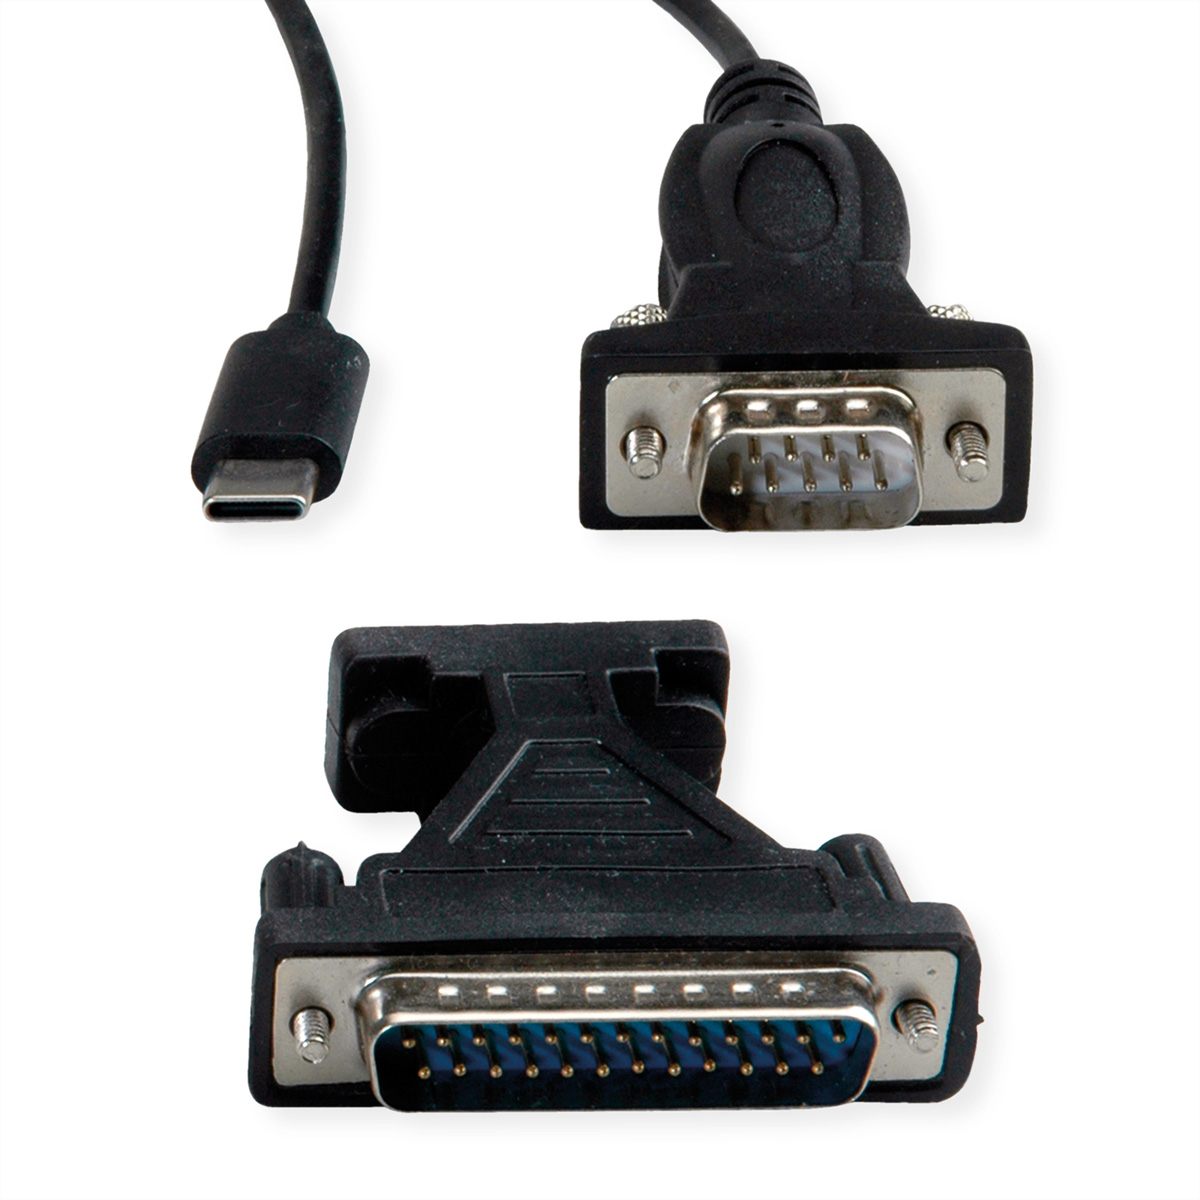 VALUE USB - C Seriell Konverter-Kabel, Konverter - USB-Seriell RS232 Typ